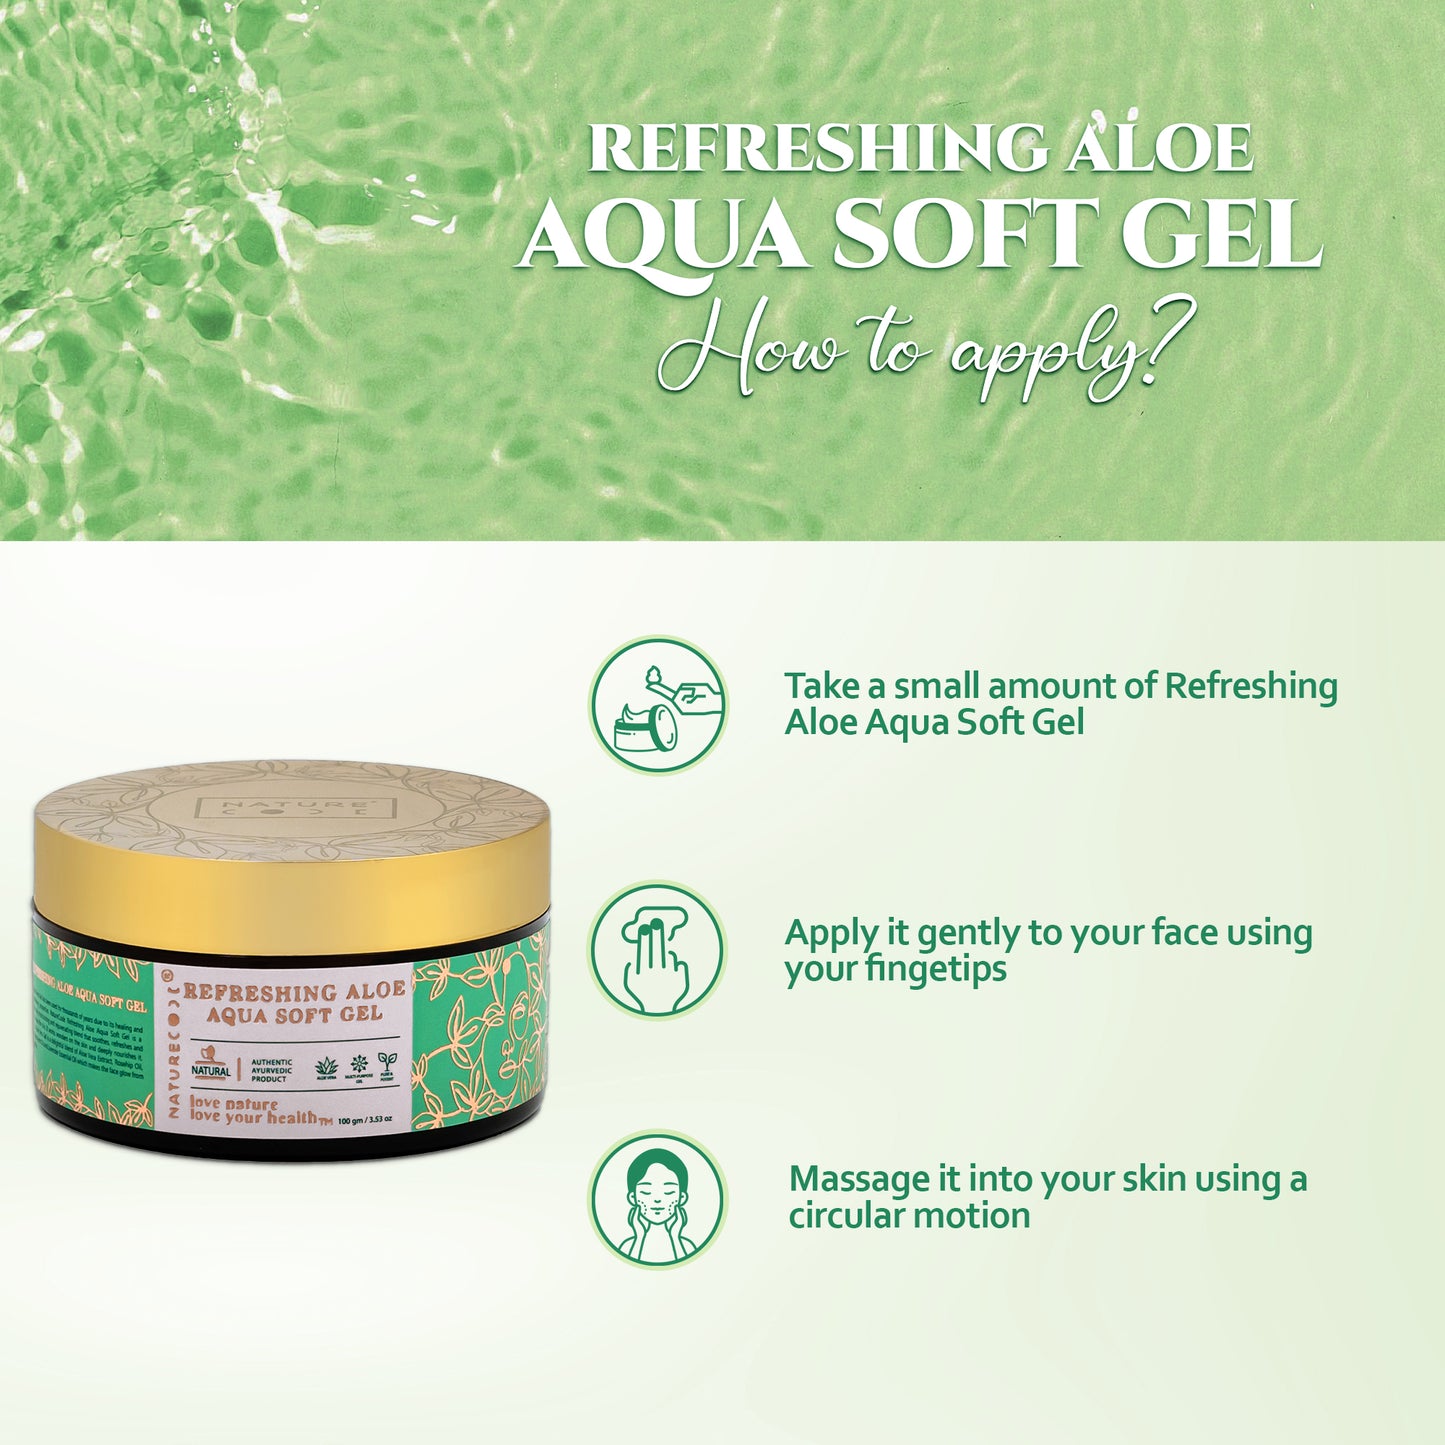 Refreshing Aloe Aqua Soft Gel